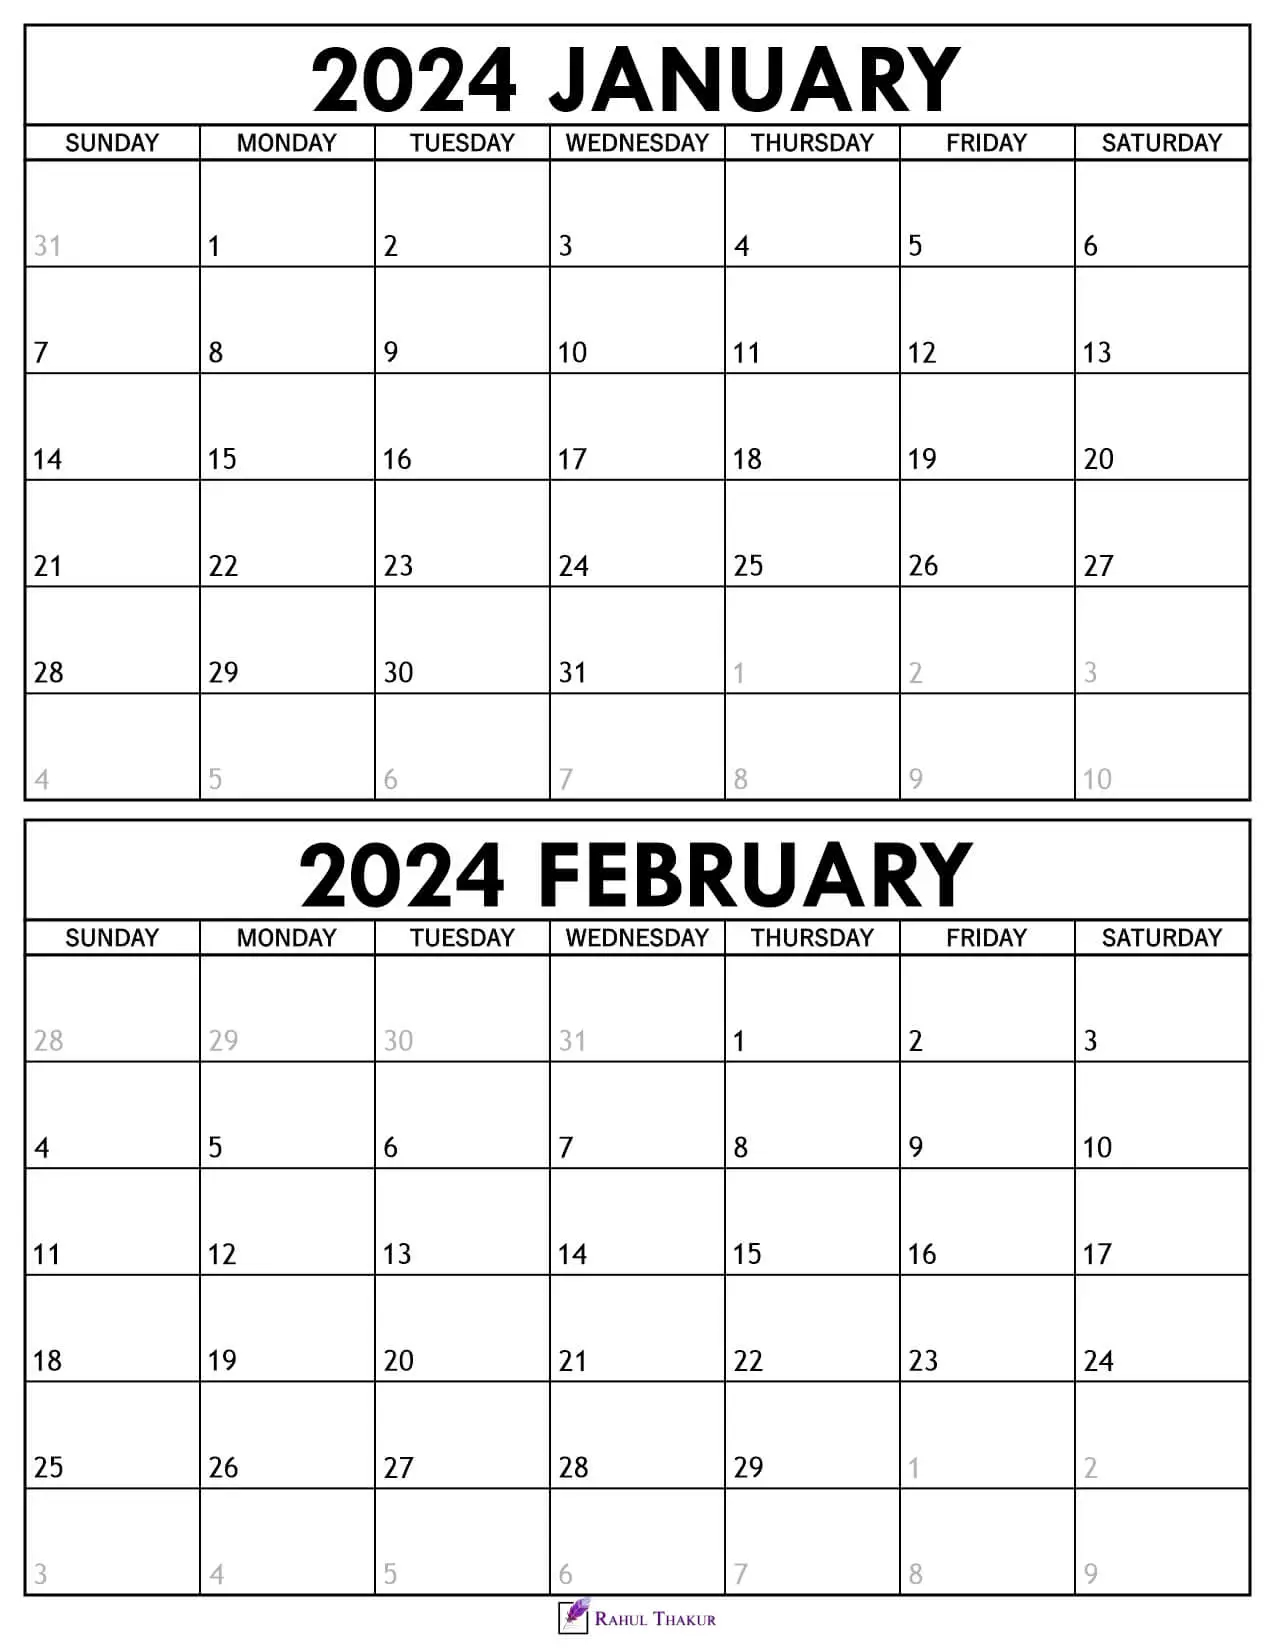 Printable January February 2024 Calendar Template - Thakur Writes for Printable Calendar 2024 January February